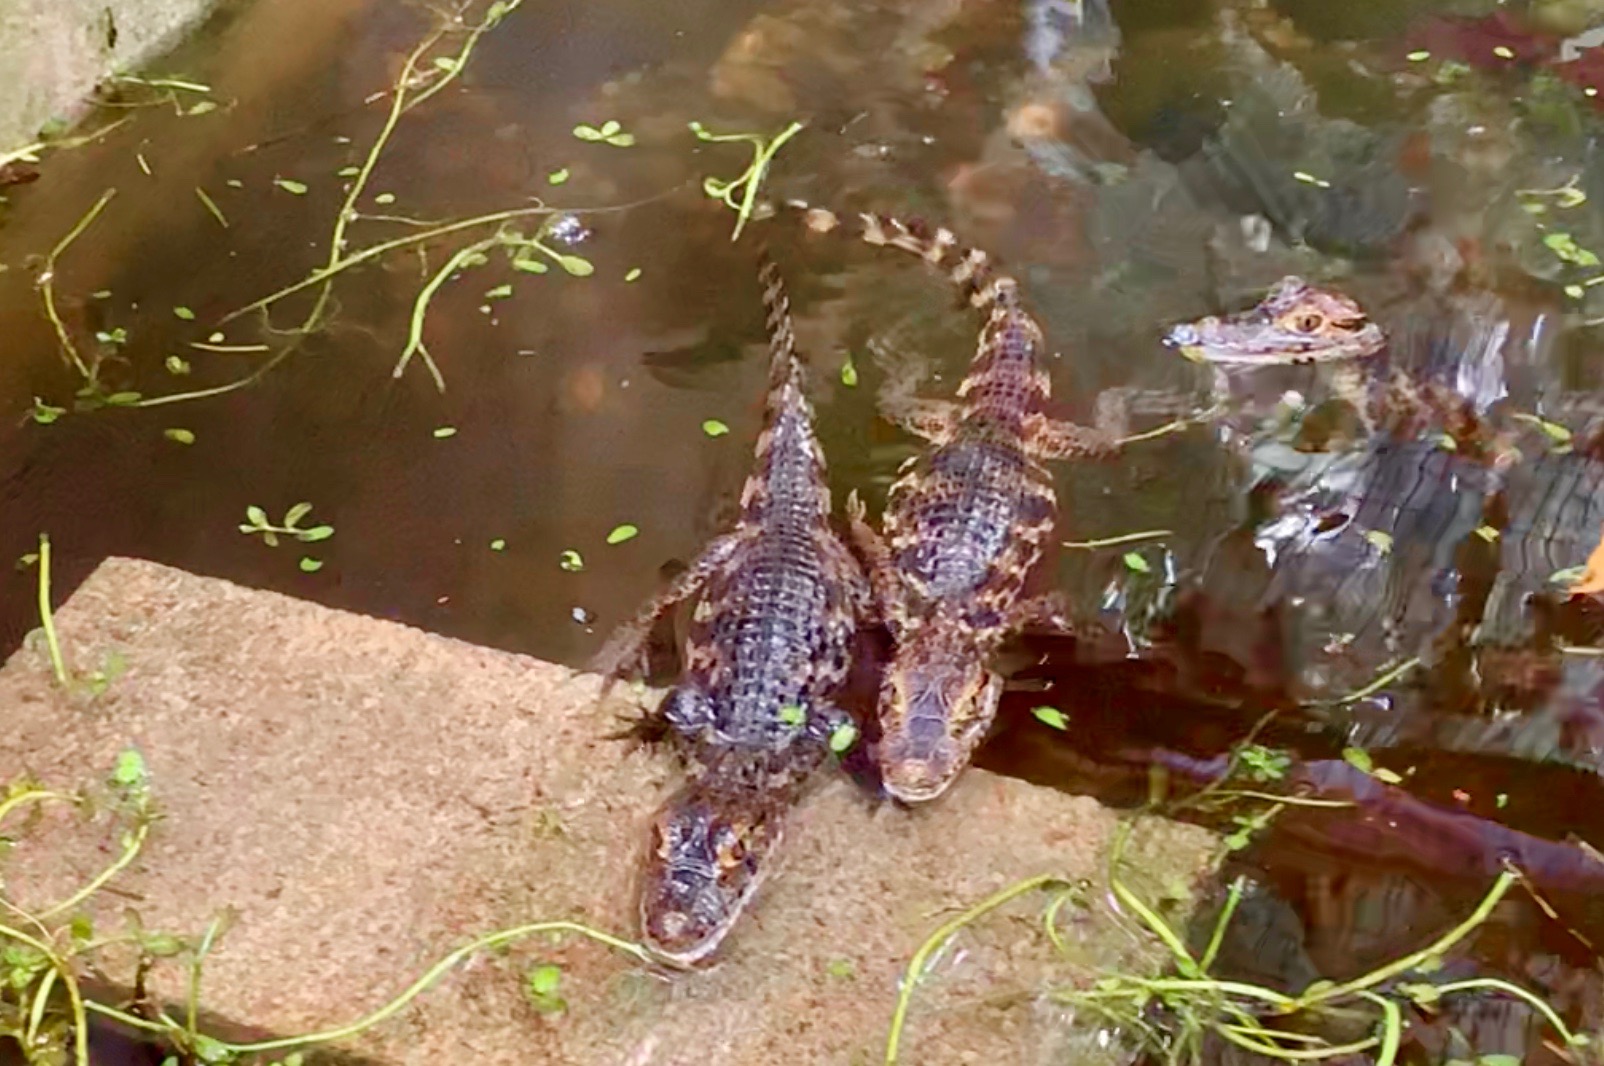  Three caimans in Costa Rica. 